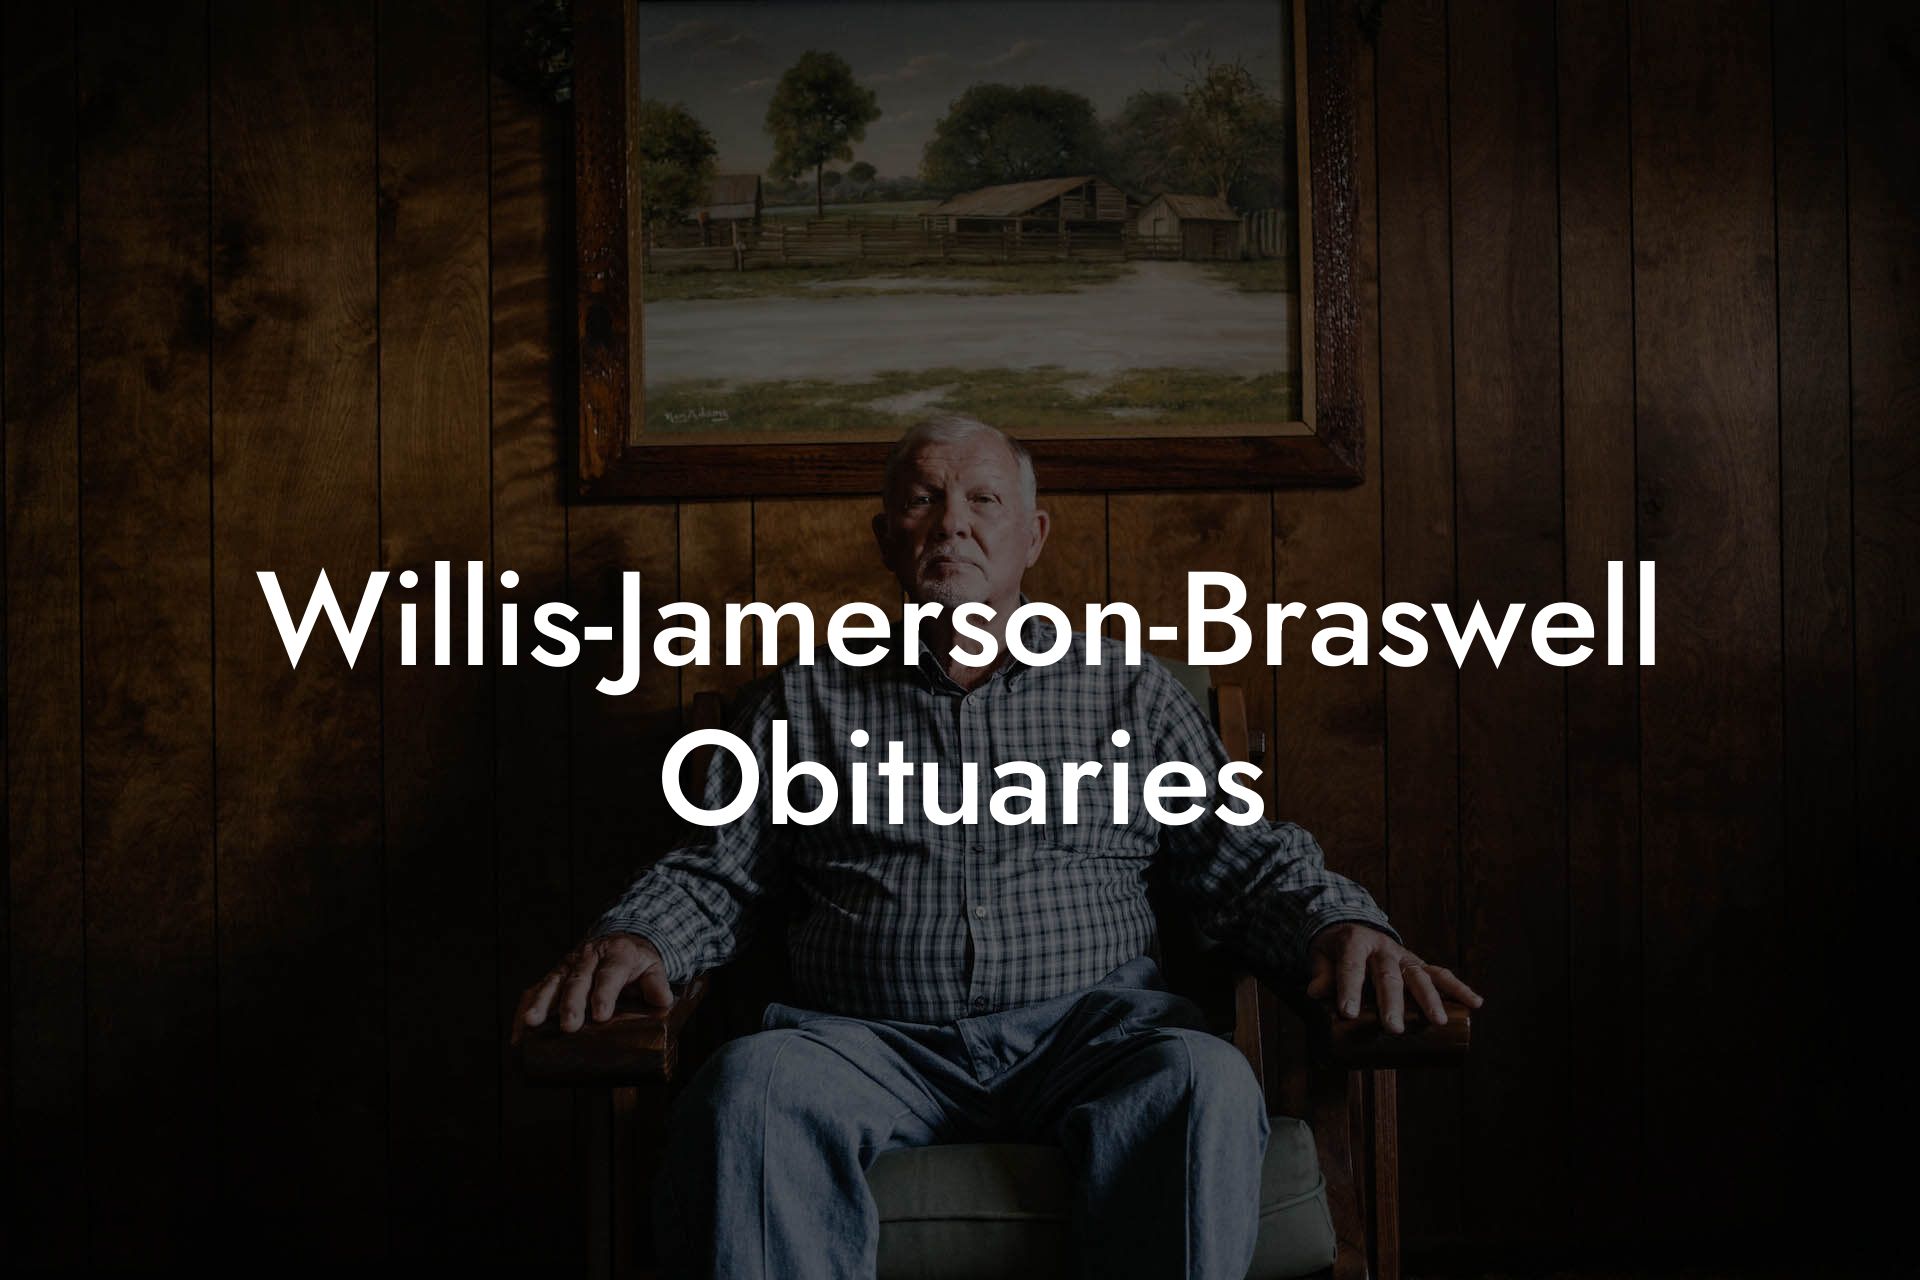 Willis-Jamerson-Braswell Obituaries